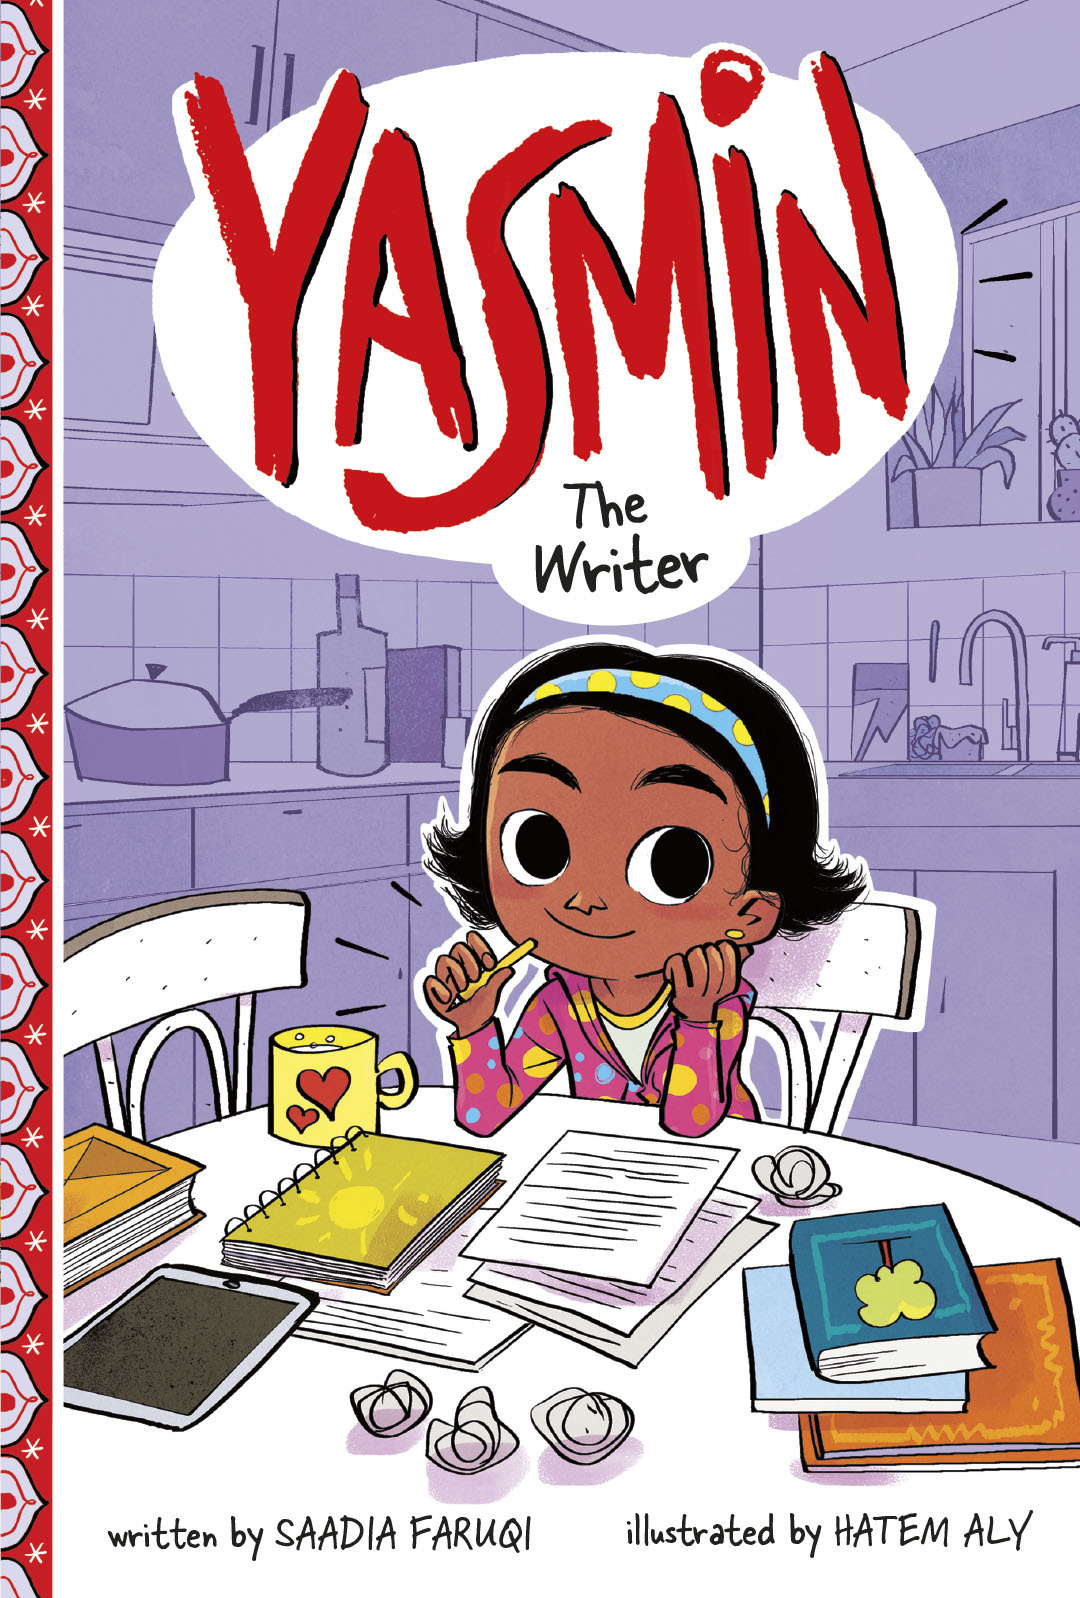 yasmin mogahed new book